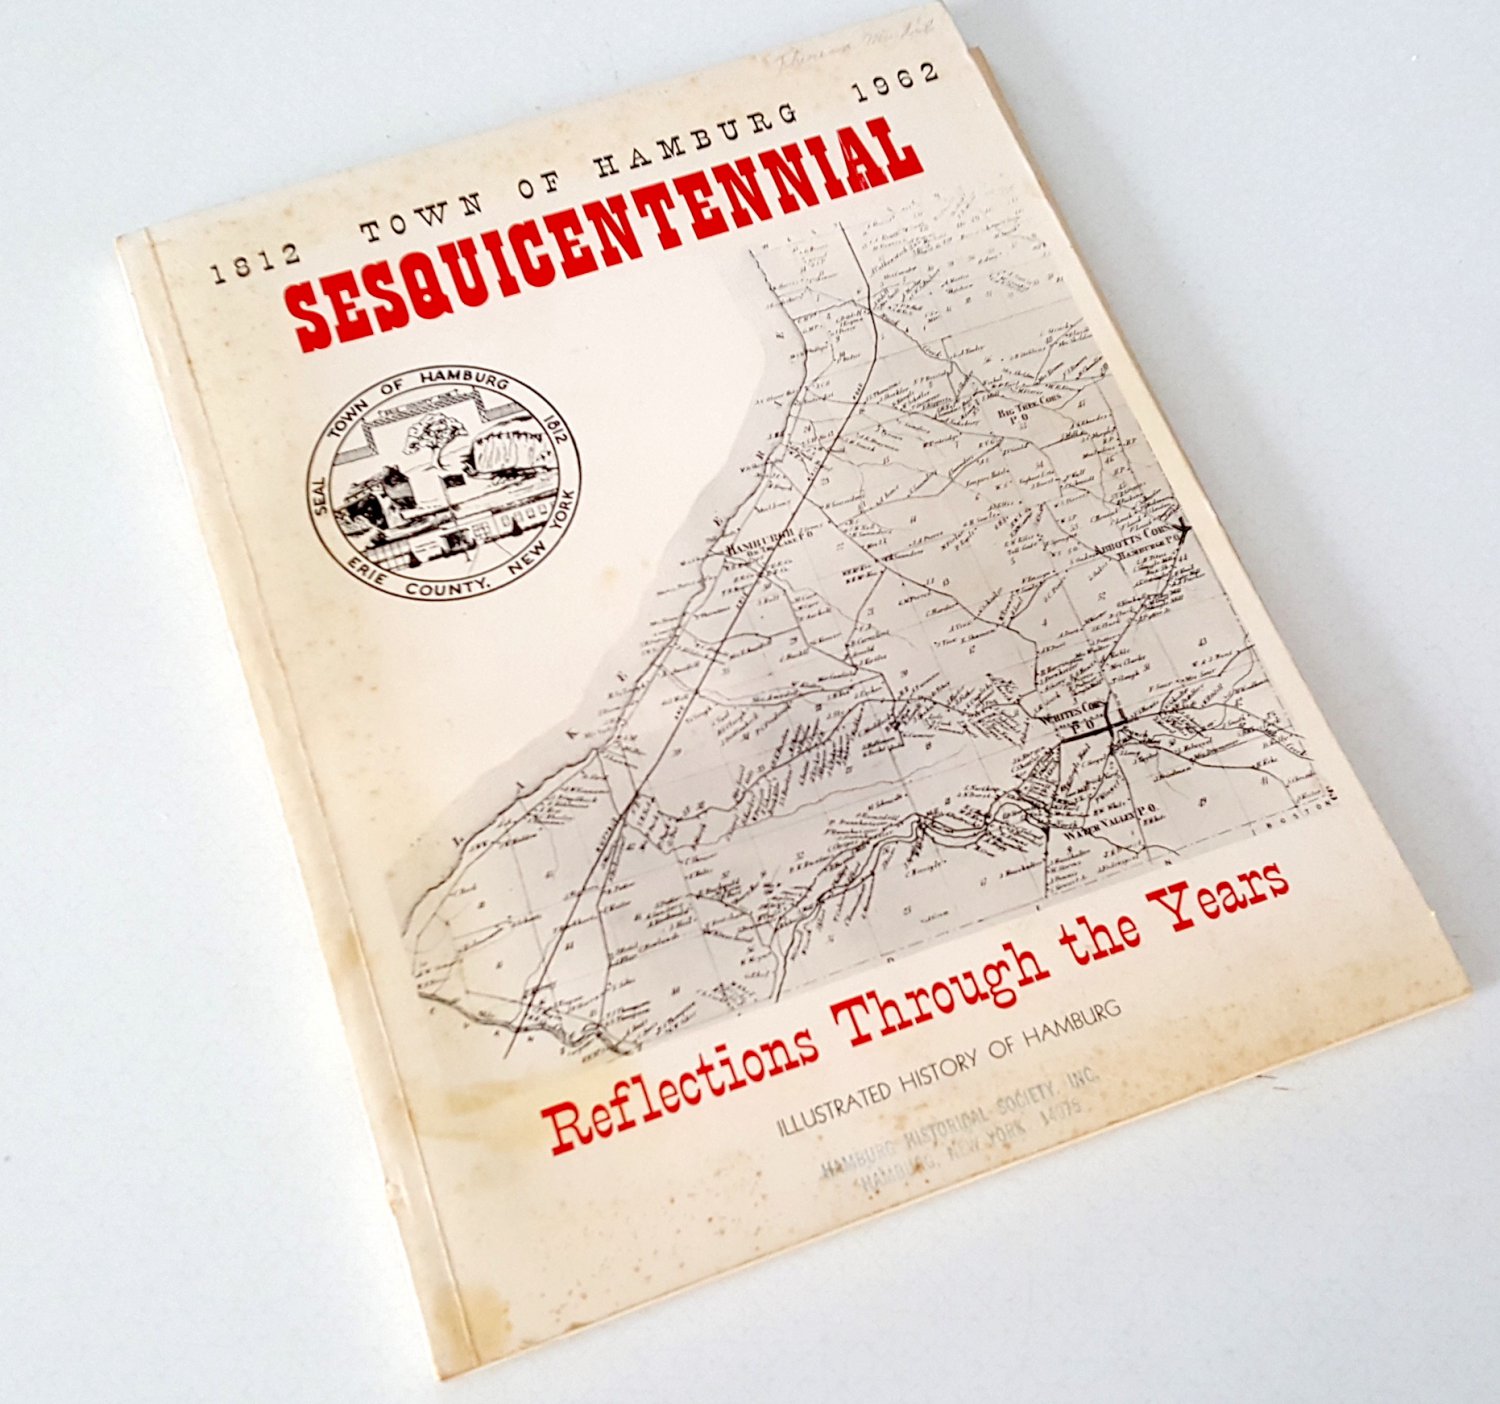 Vintage 1912-1962 Hamburg New York Sesquicentennial Commemorative Book